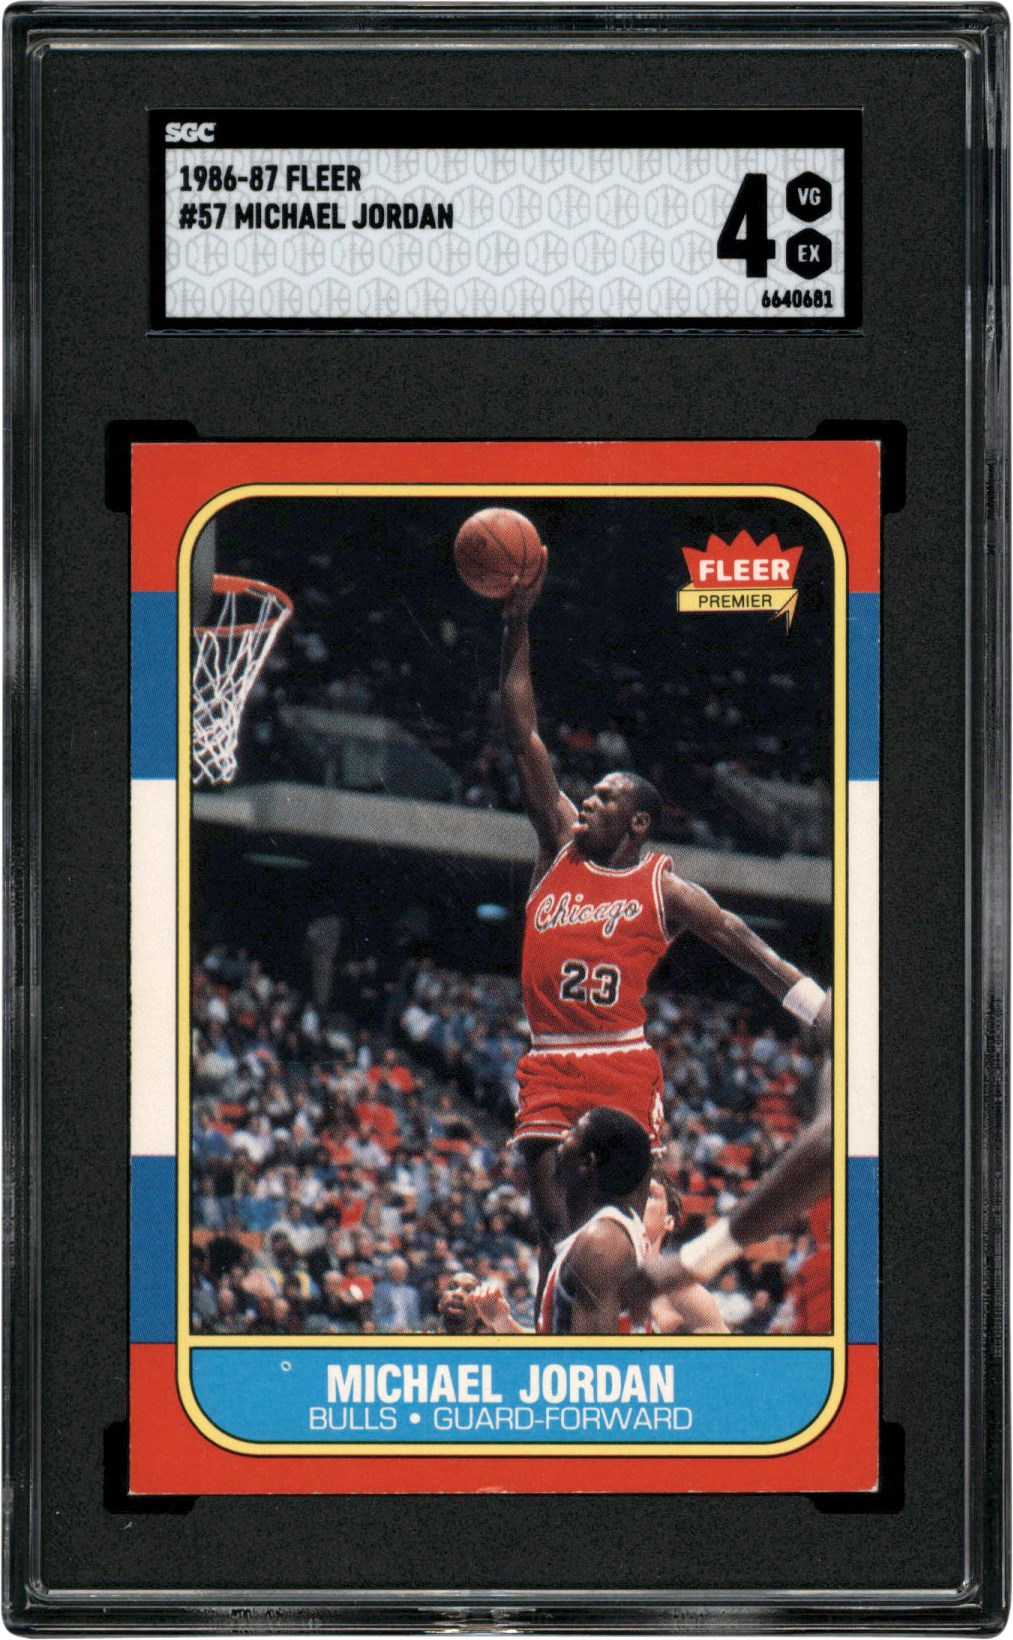 Basketball Cards - 1986-1987 Fleer Basketball #57 Michael Jordan Rookie Card SGC VG-EX 4